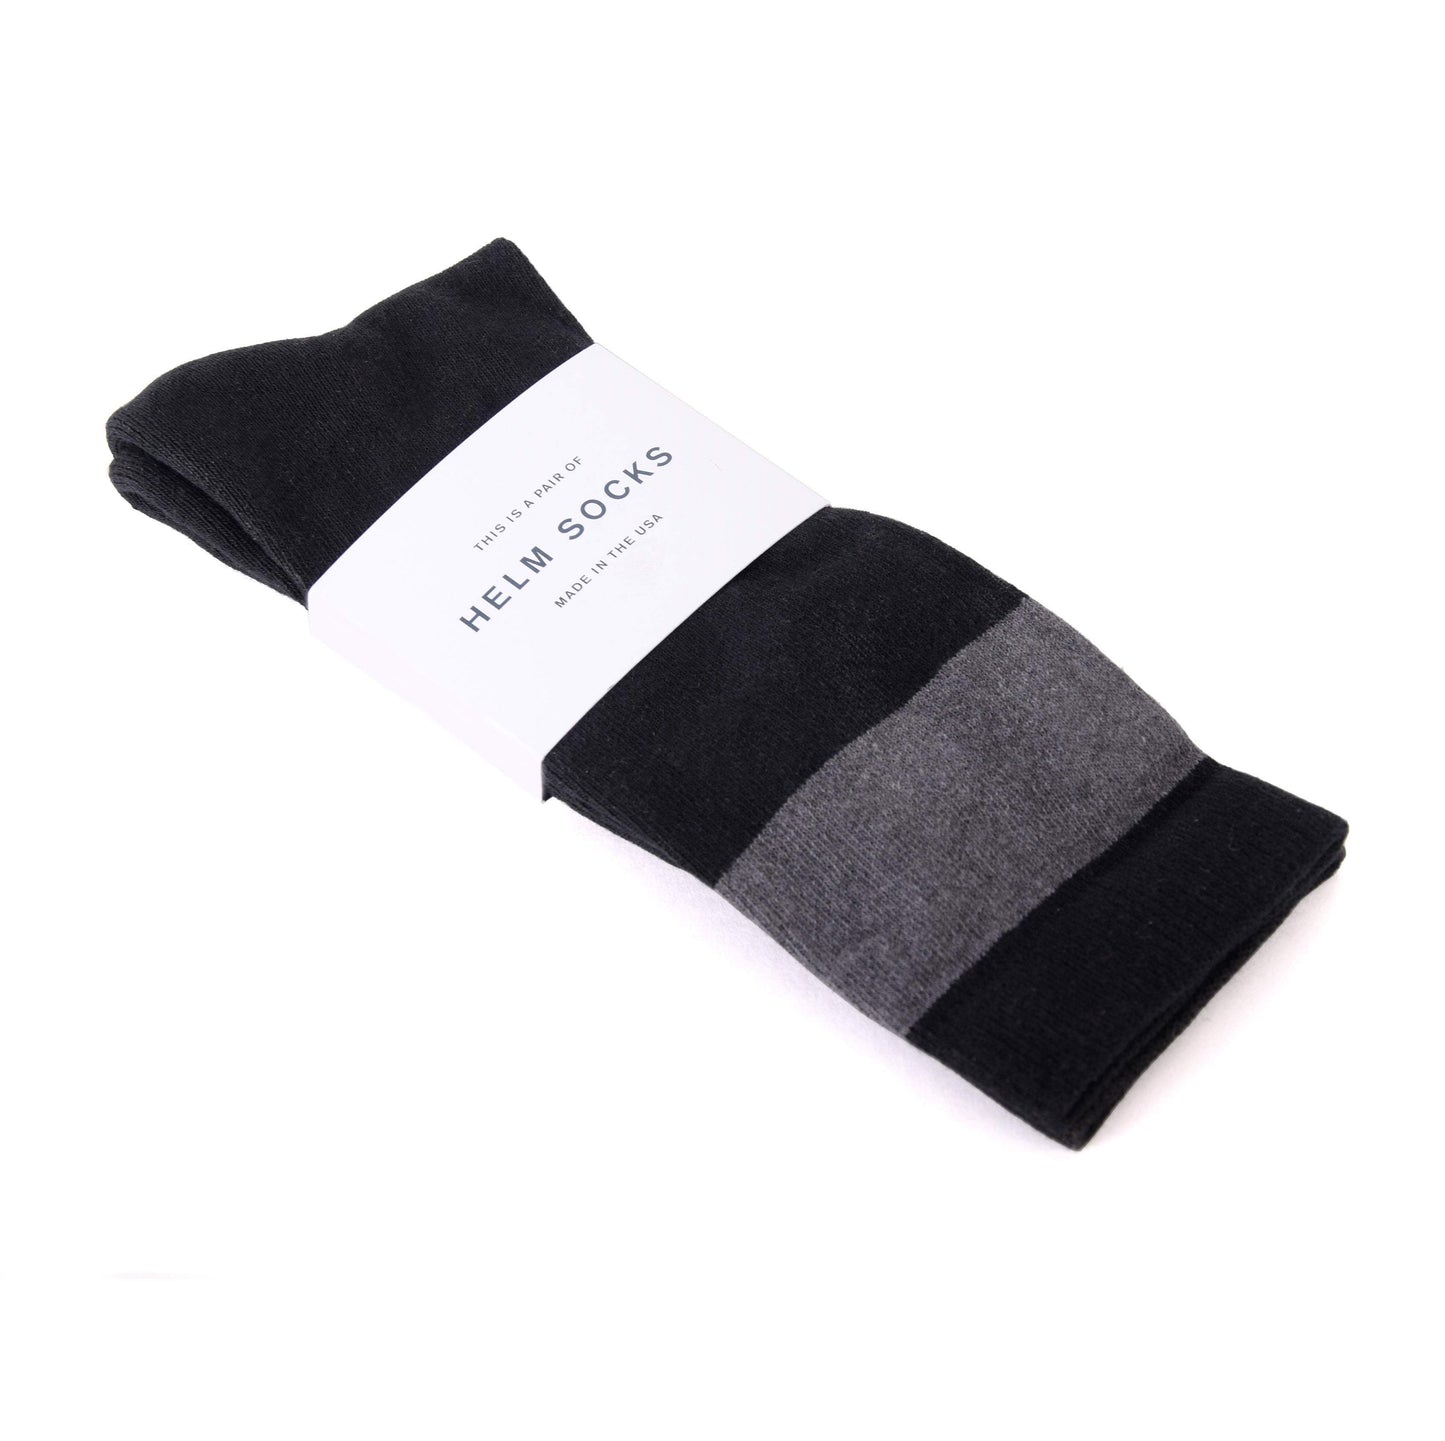 HELM Socks HELM Socks - Black+Grey